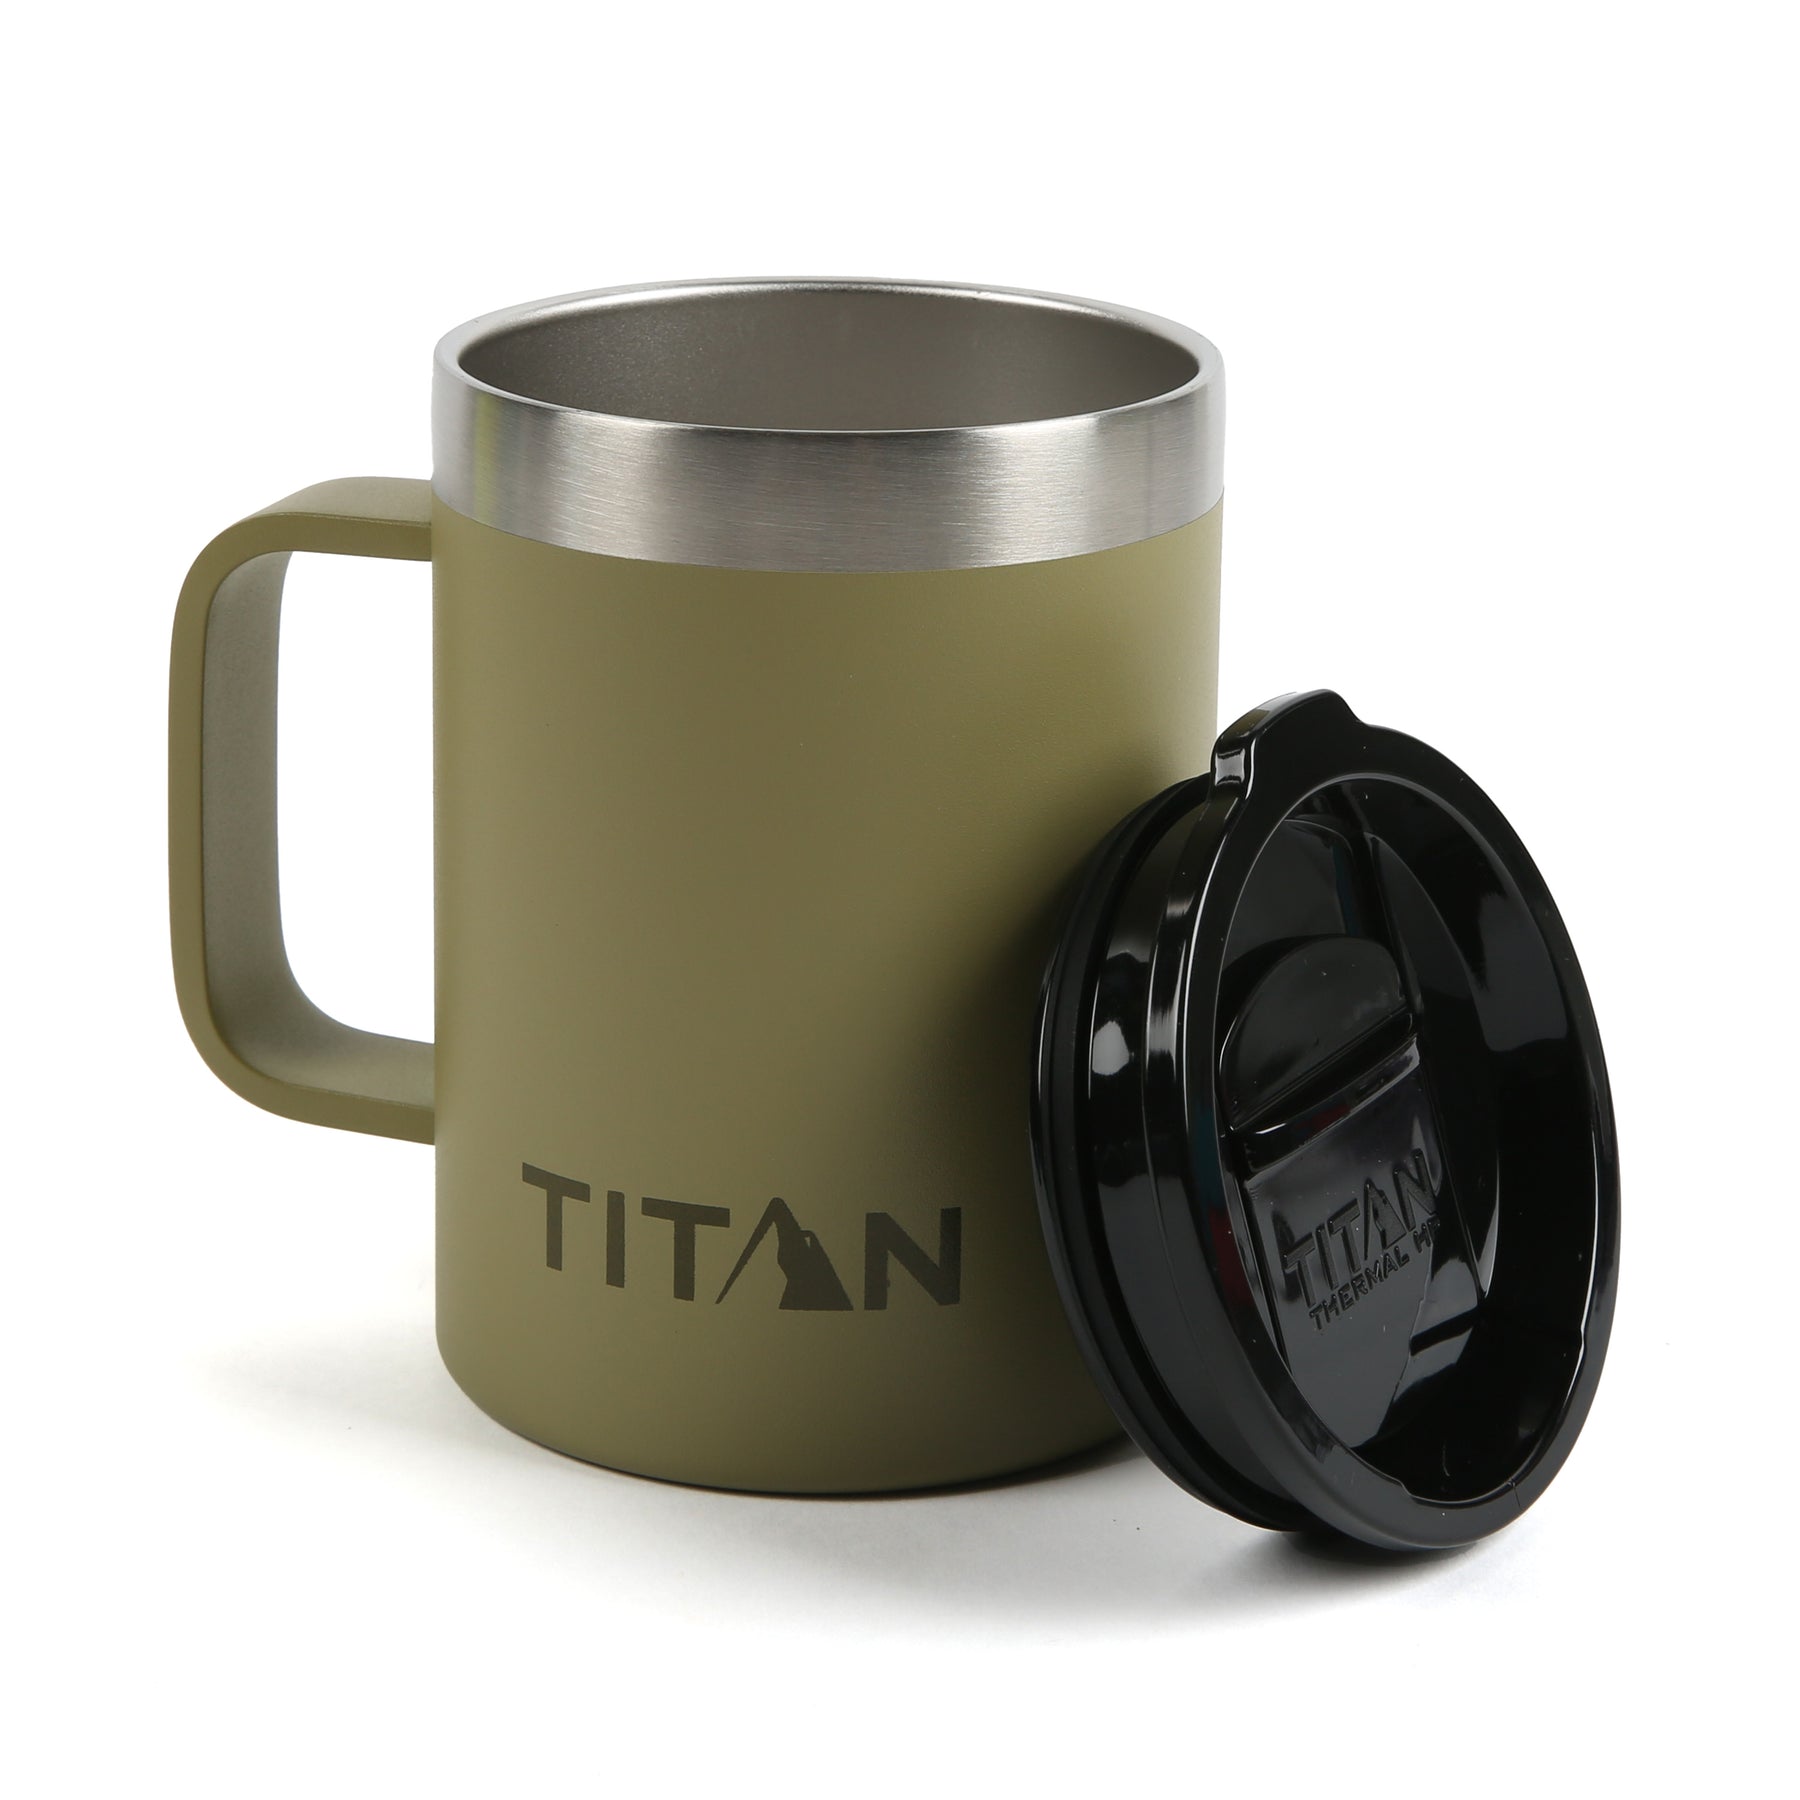  Arctic Zone Titan Thermal Mug - 14 oz. 151562